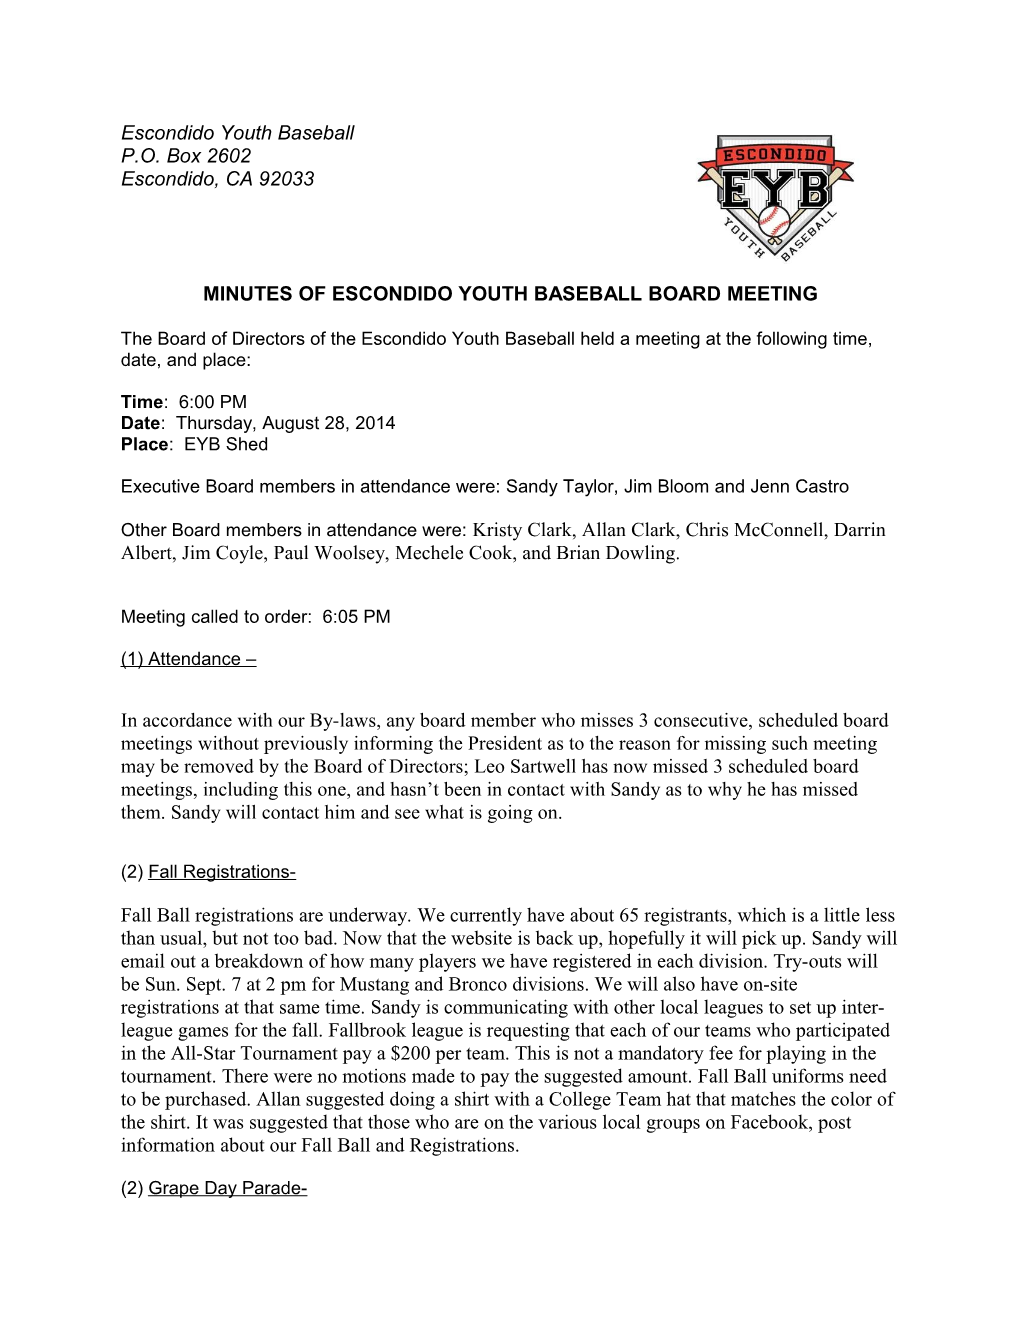 Minutes of Escondido Youth Baseball Board Meeting